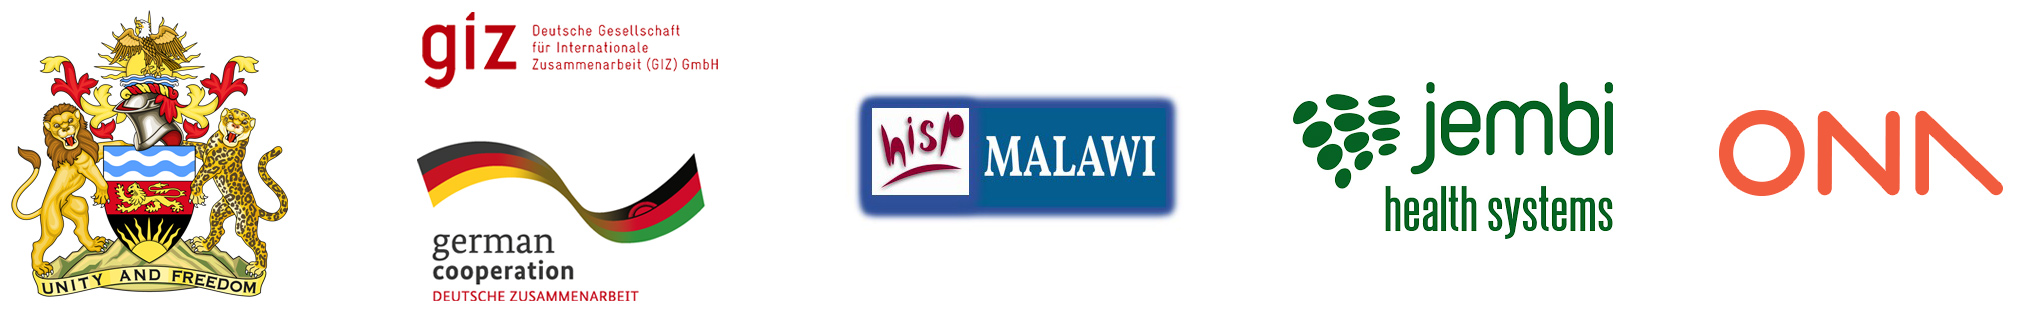 Ona partners in Malawi